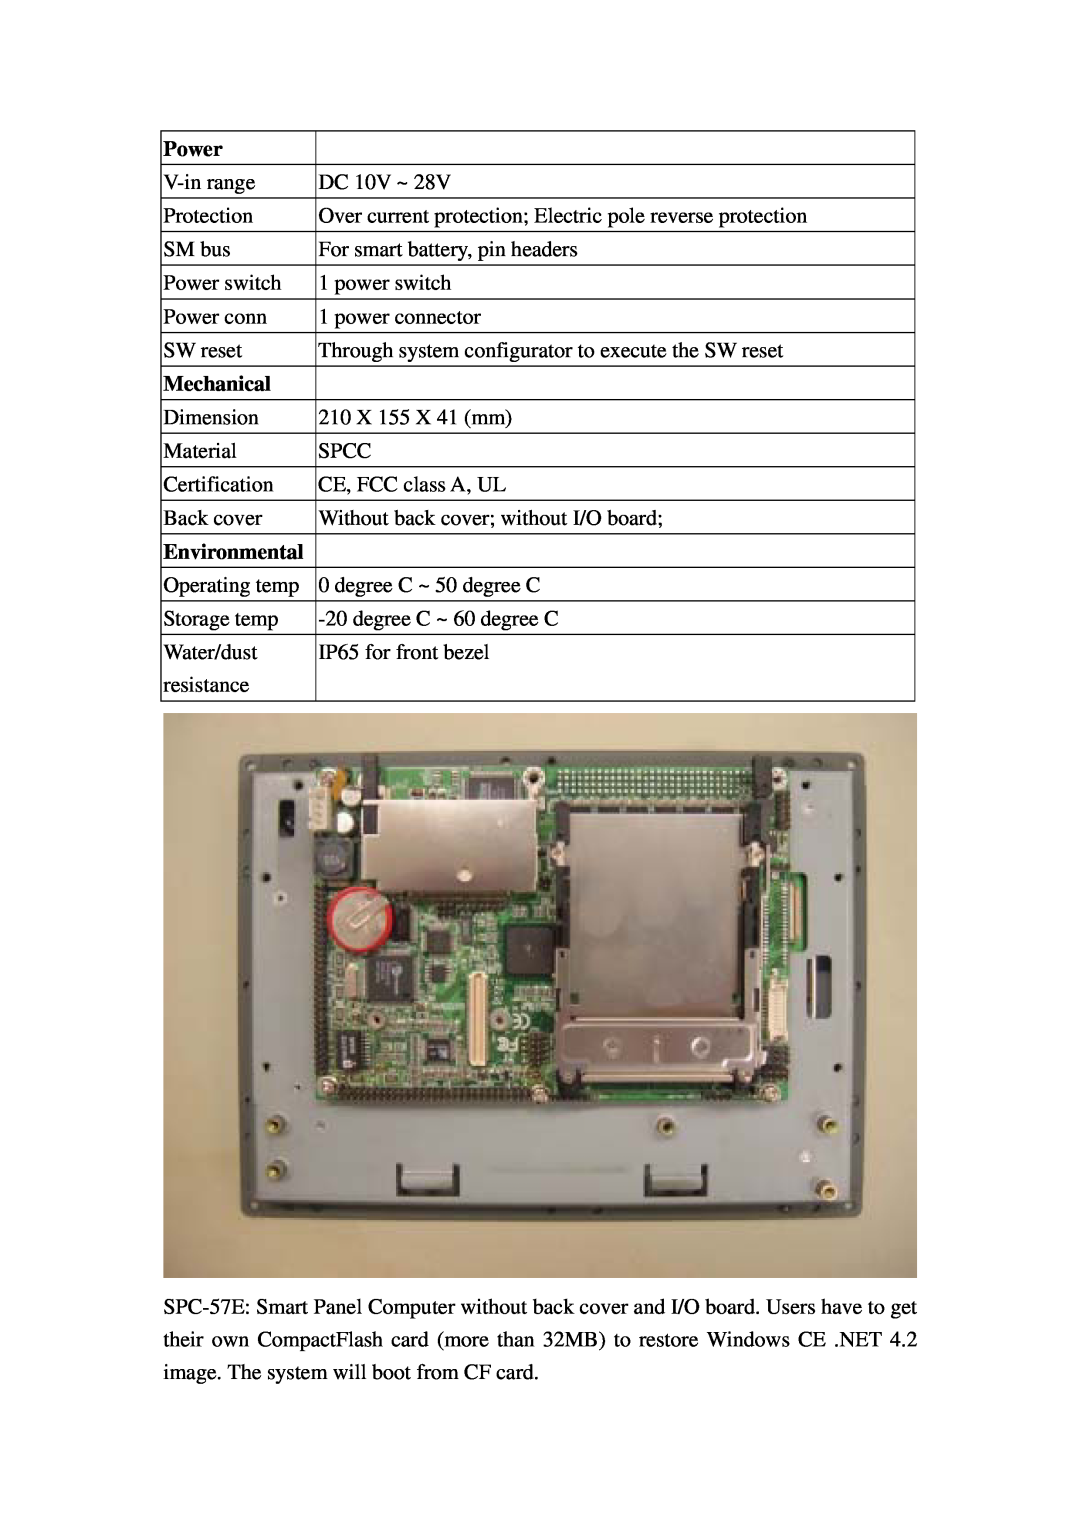 Advantech SPC-57 user manual Power, Mechanical, Environmental 